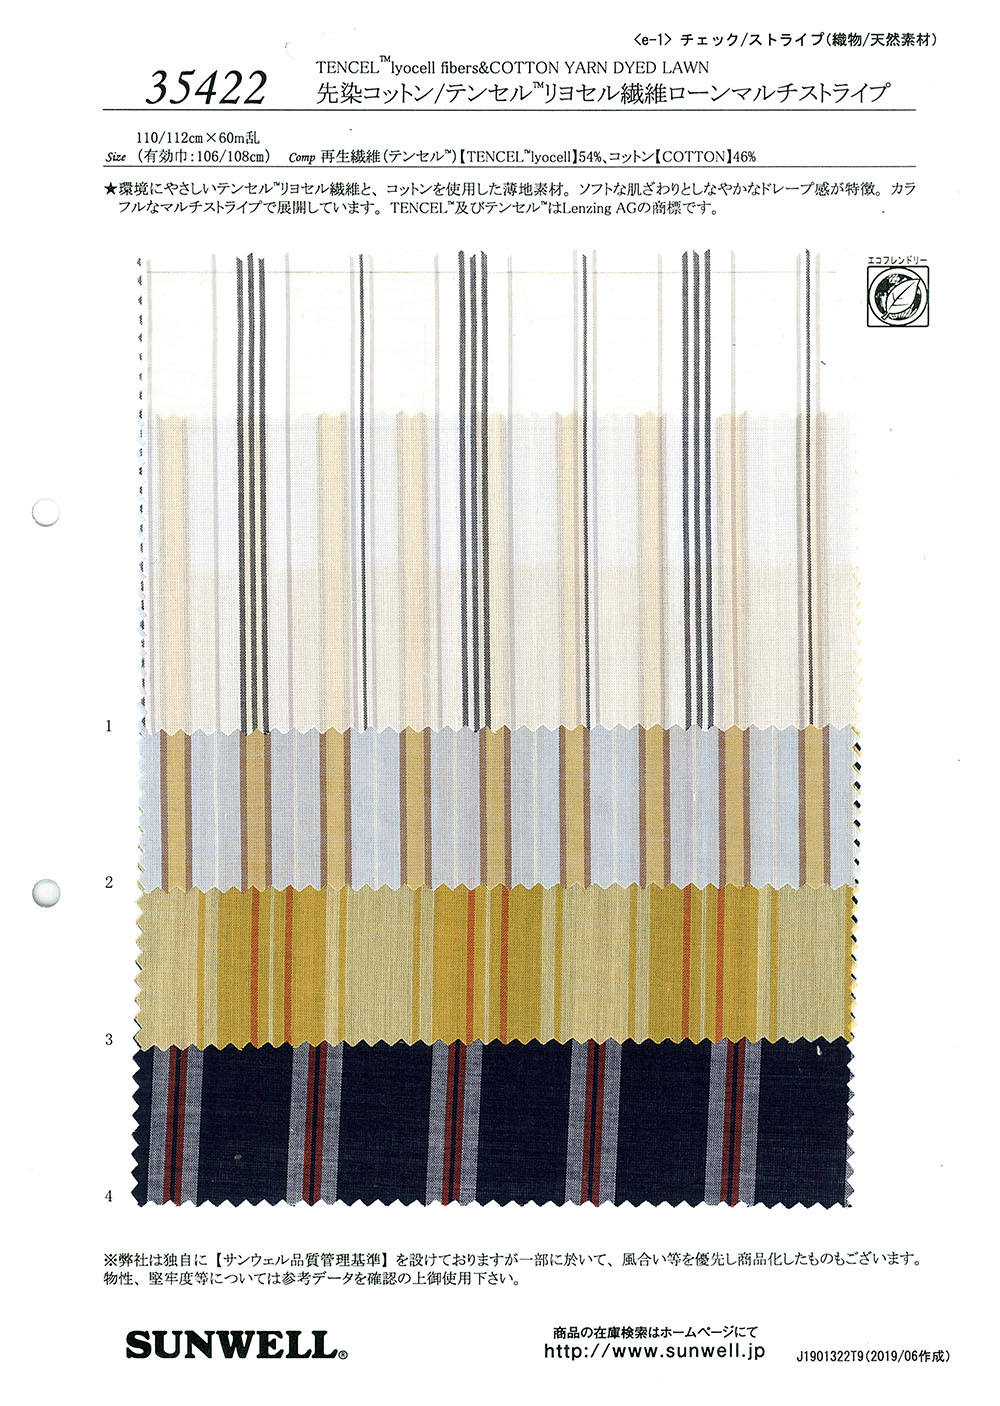 35422 Garngefärbte Baumwolle / Tencel (TM) Lyocell-Faser Rasen Multi-Streifen[Textilgewebe] SUNWELL